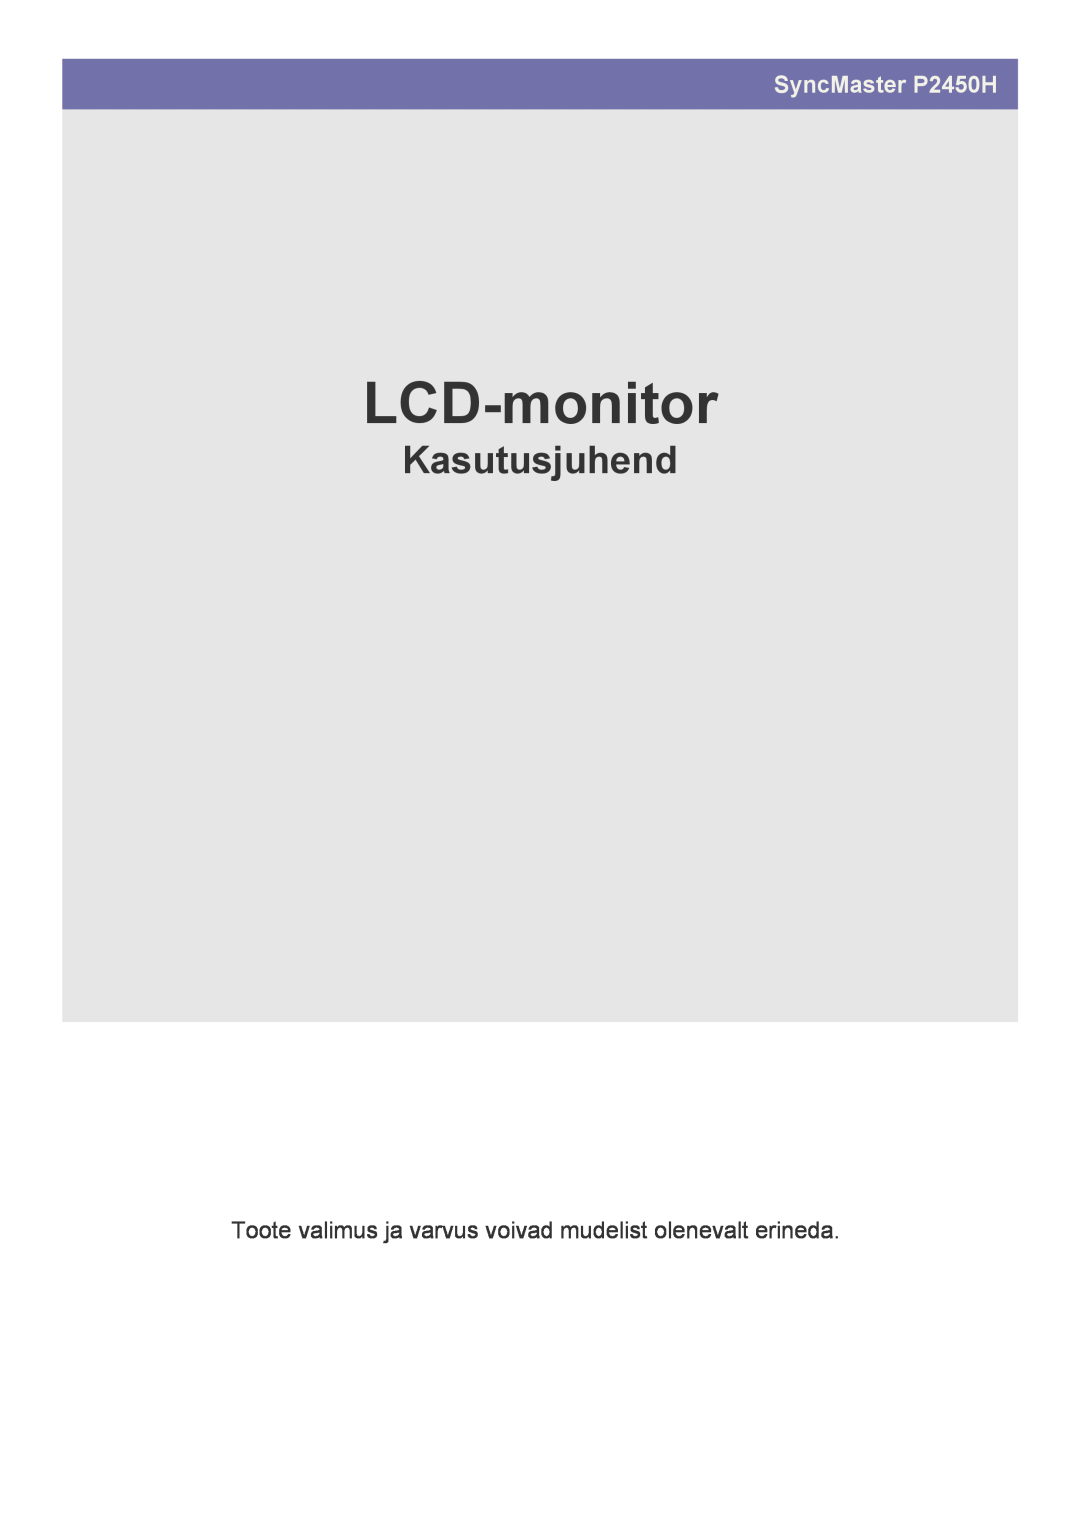 Samsung LS24LRZKUV/EN manual LCD-monitor, Kasutusjuhend, SyncMaster P2450H 